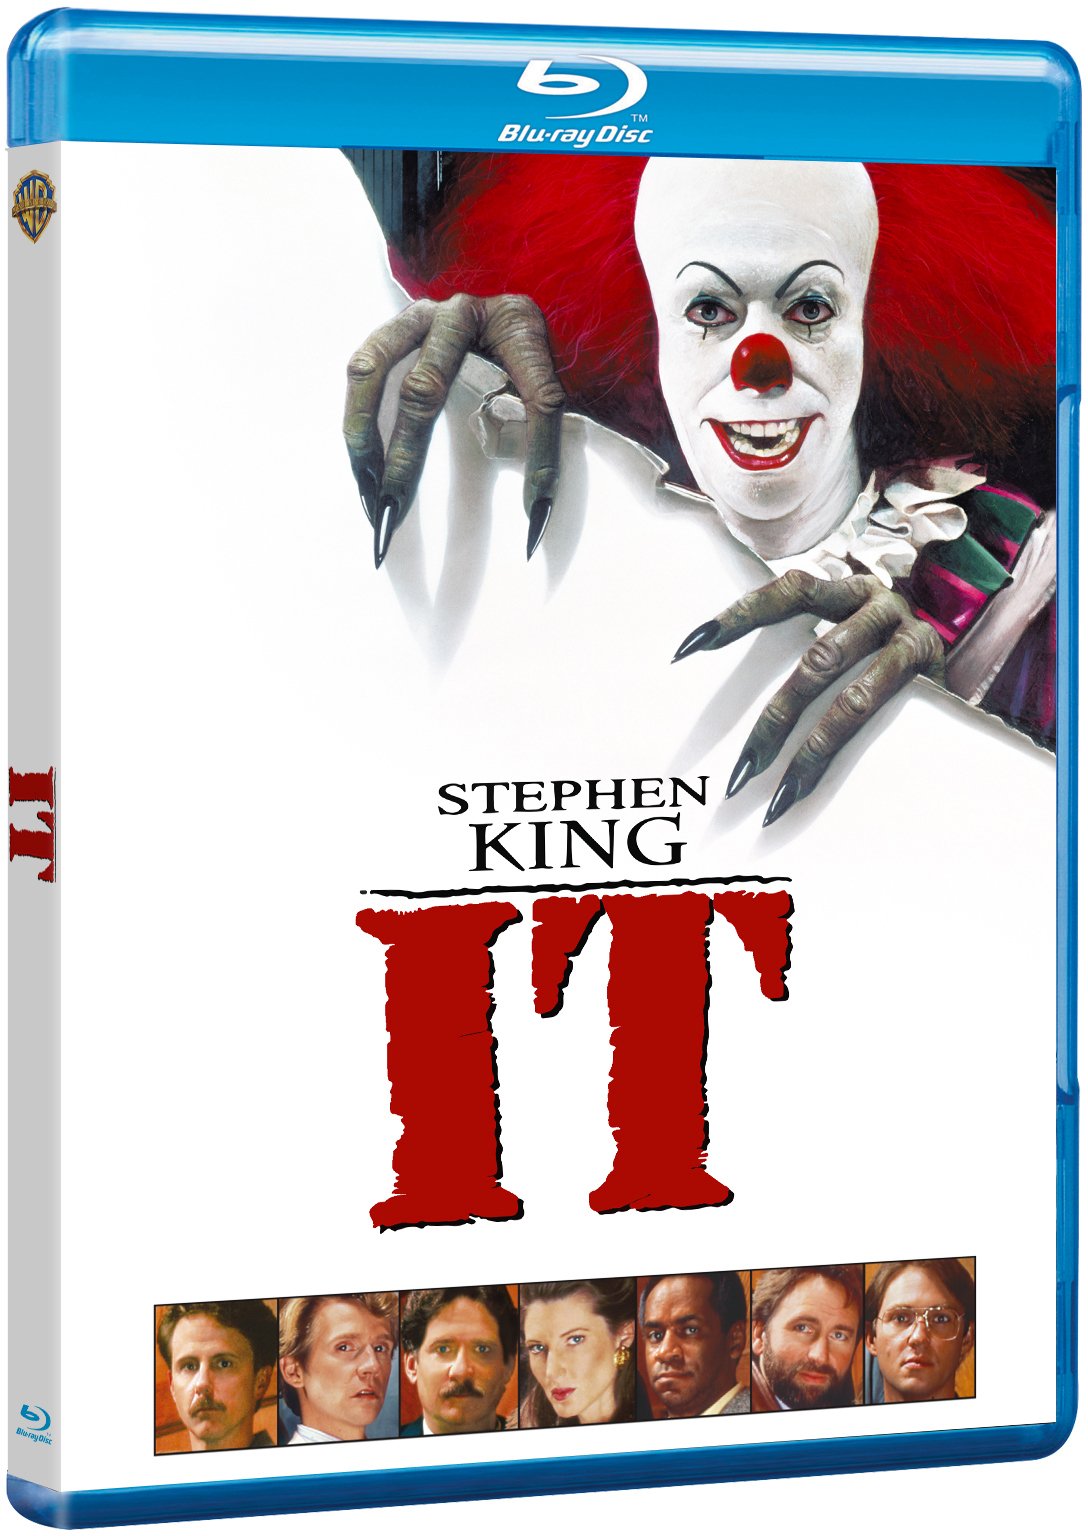 Packshot della miniserie IT in Blu-ray